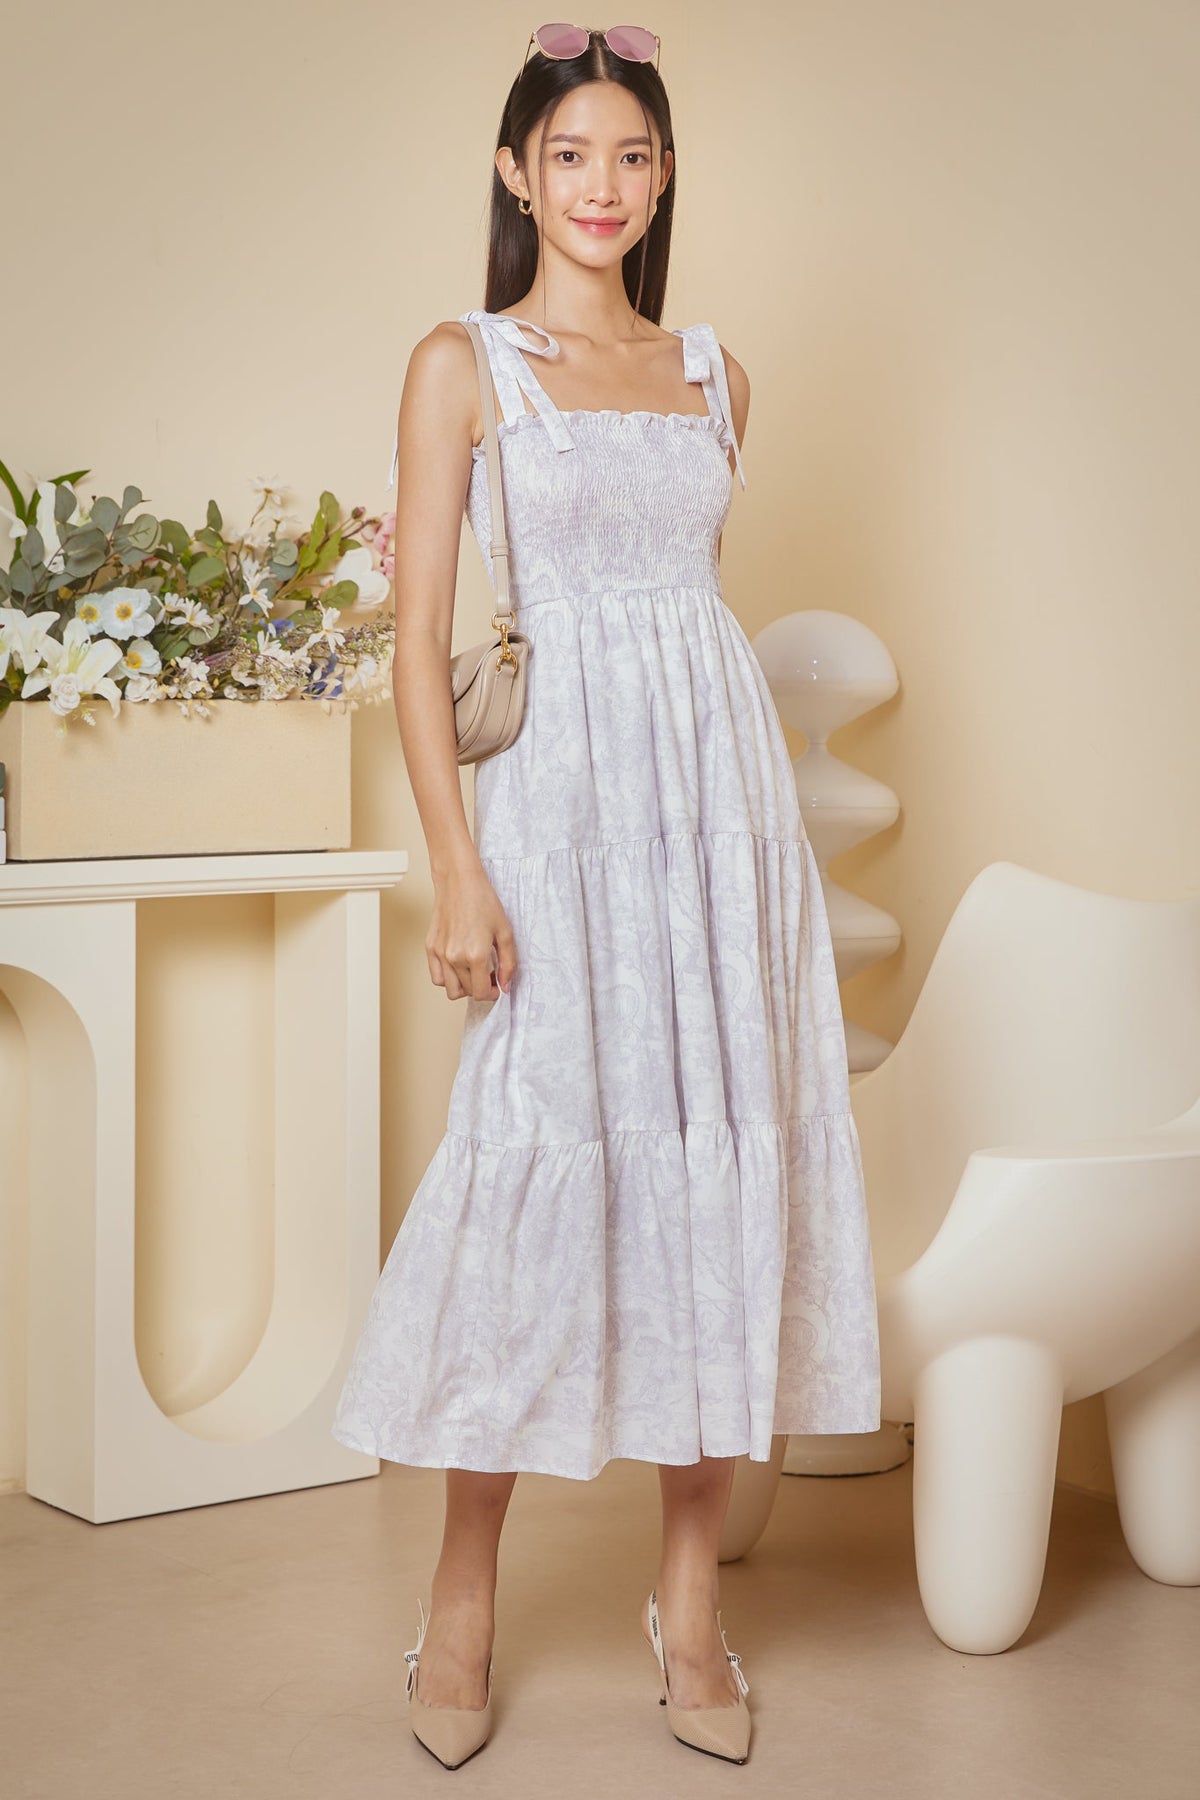 Restocked* Riviera Tie-Strap Smocked Dress in Lilac Grey